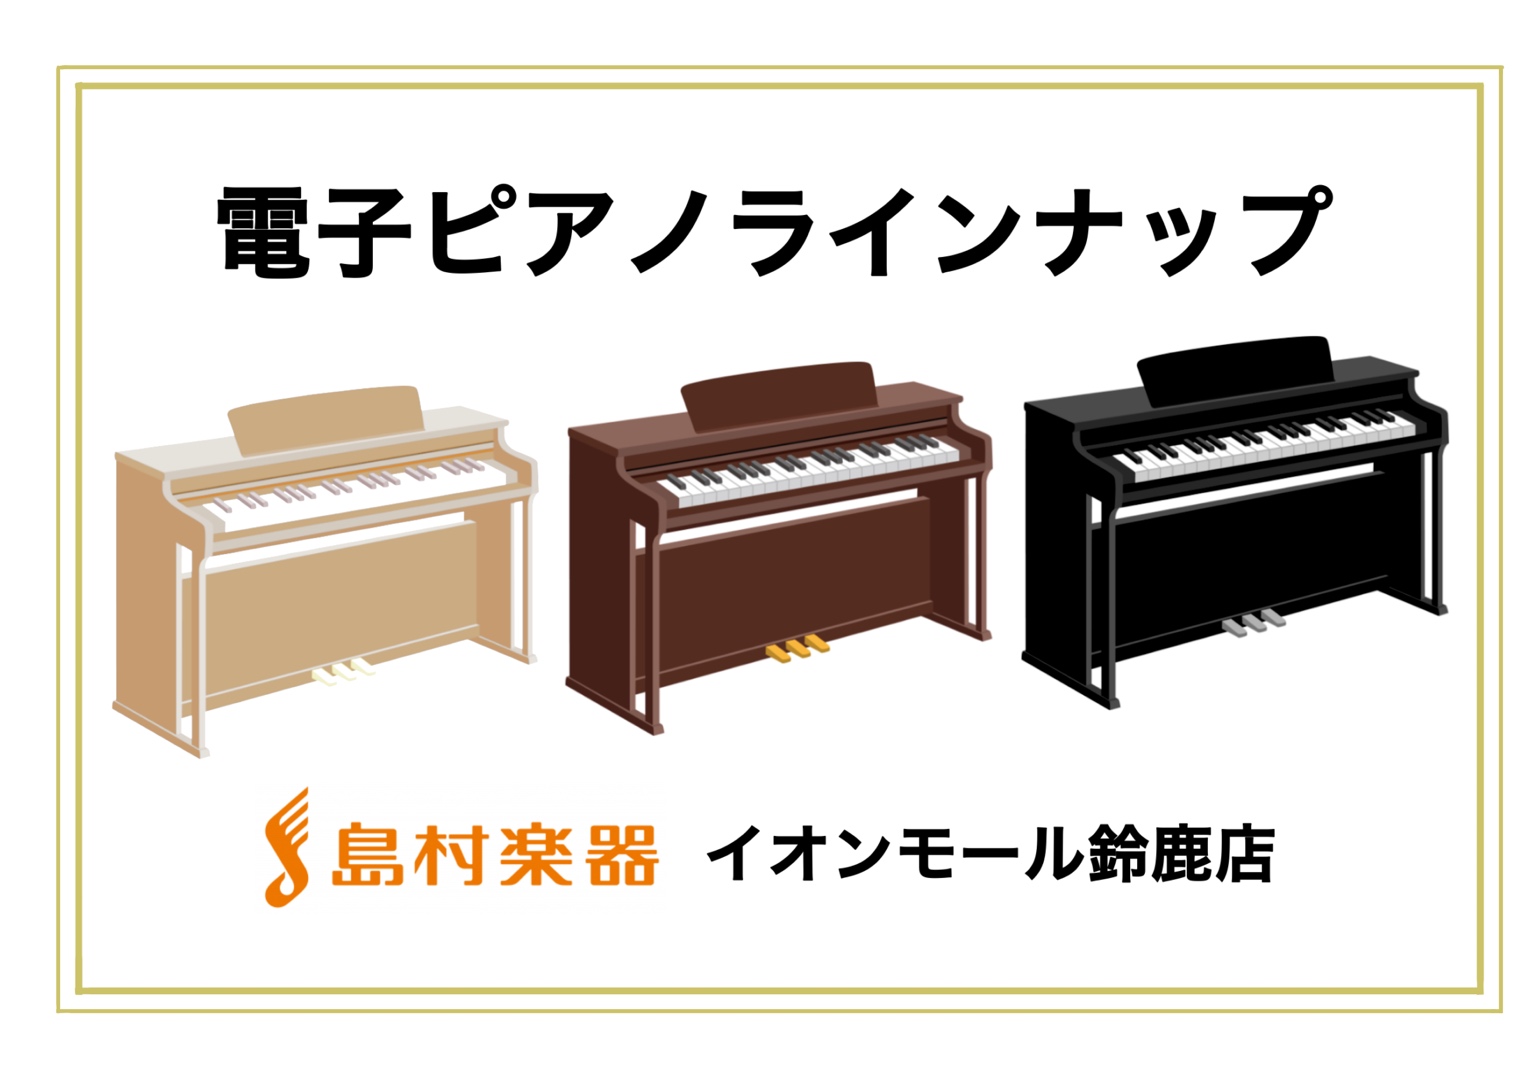 YAMAHA・Roland・KAWAI・CASIOなど主要メーカーがたくさん♪常時30～40種類の電子ピアノを展示！